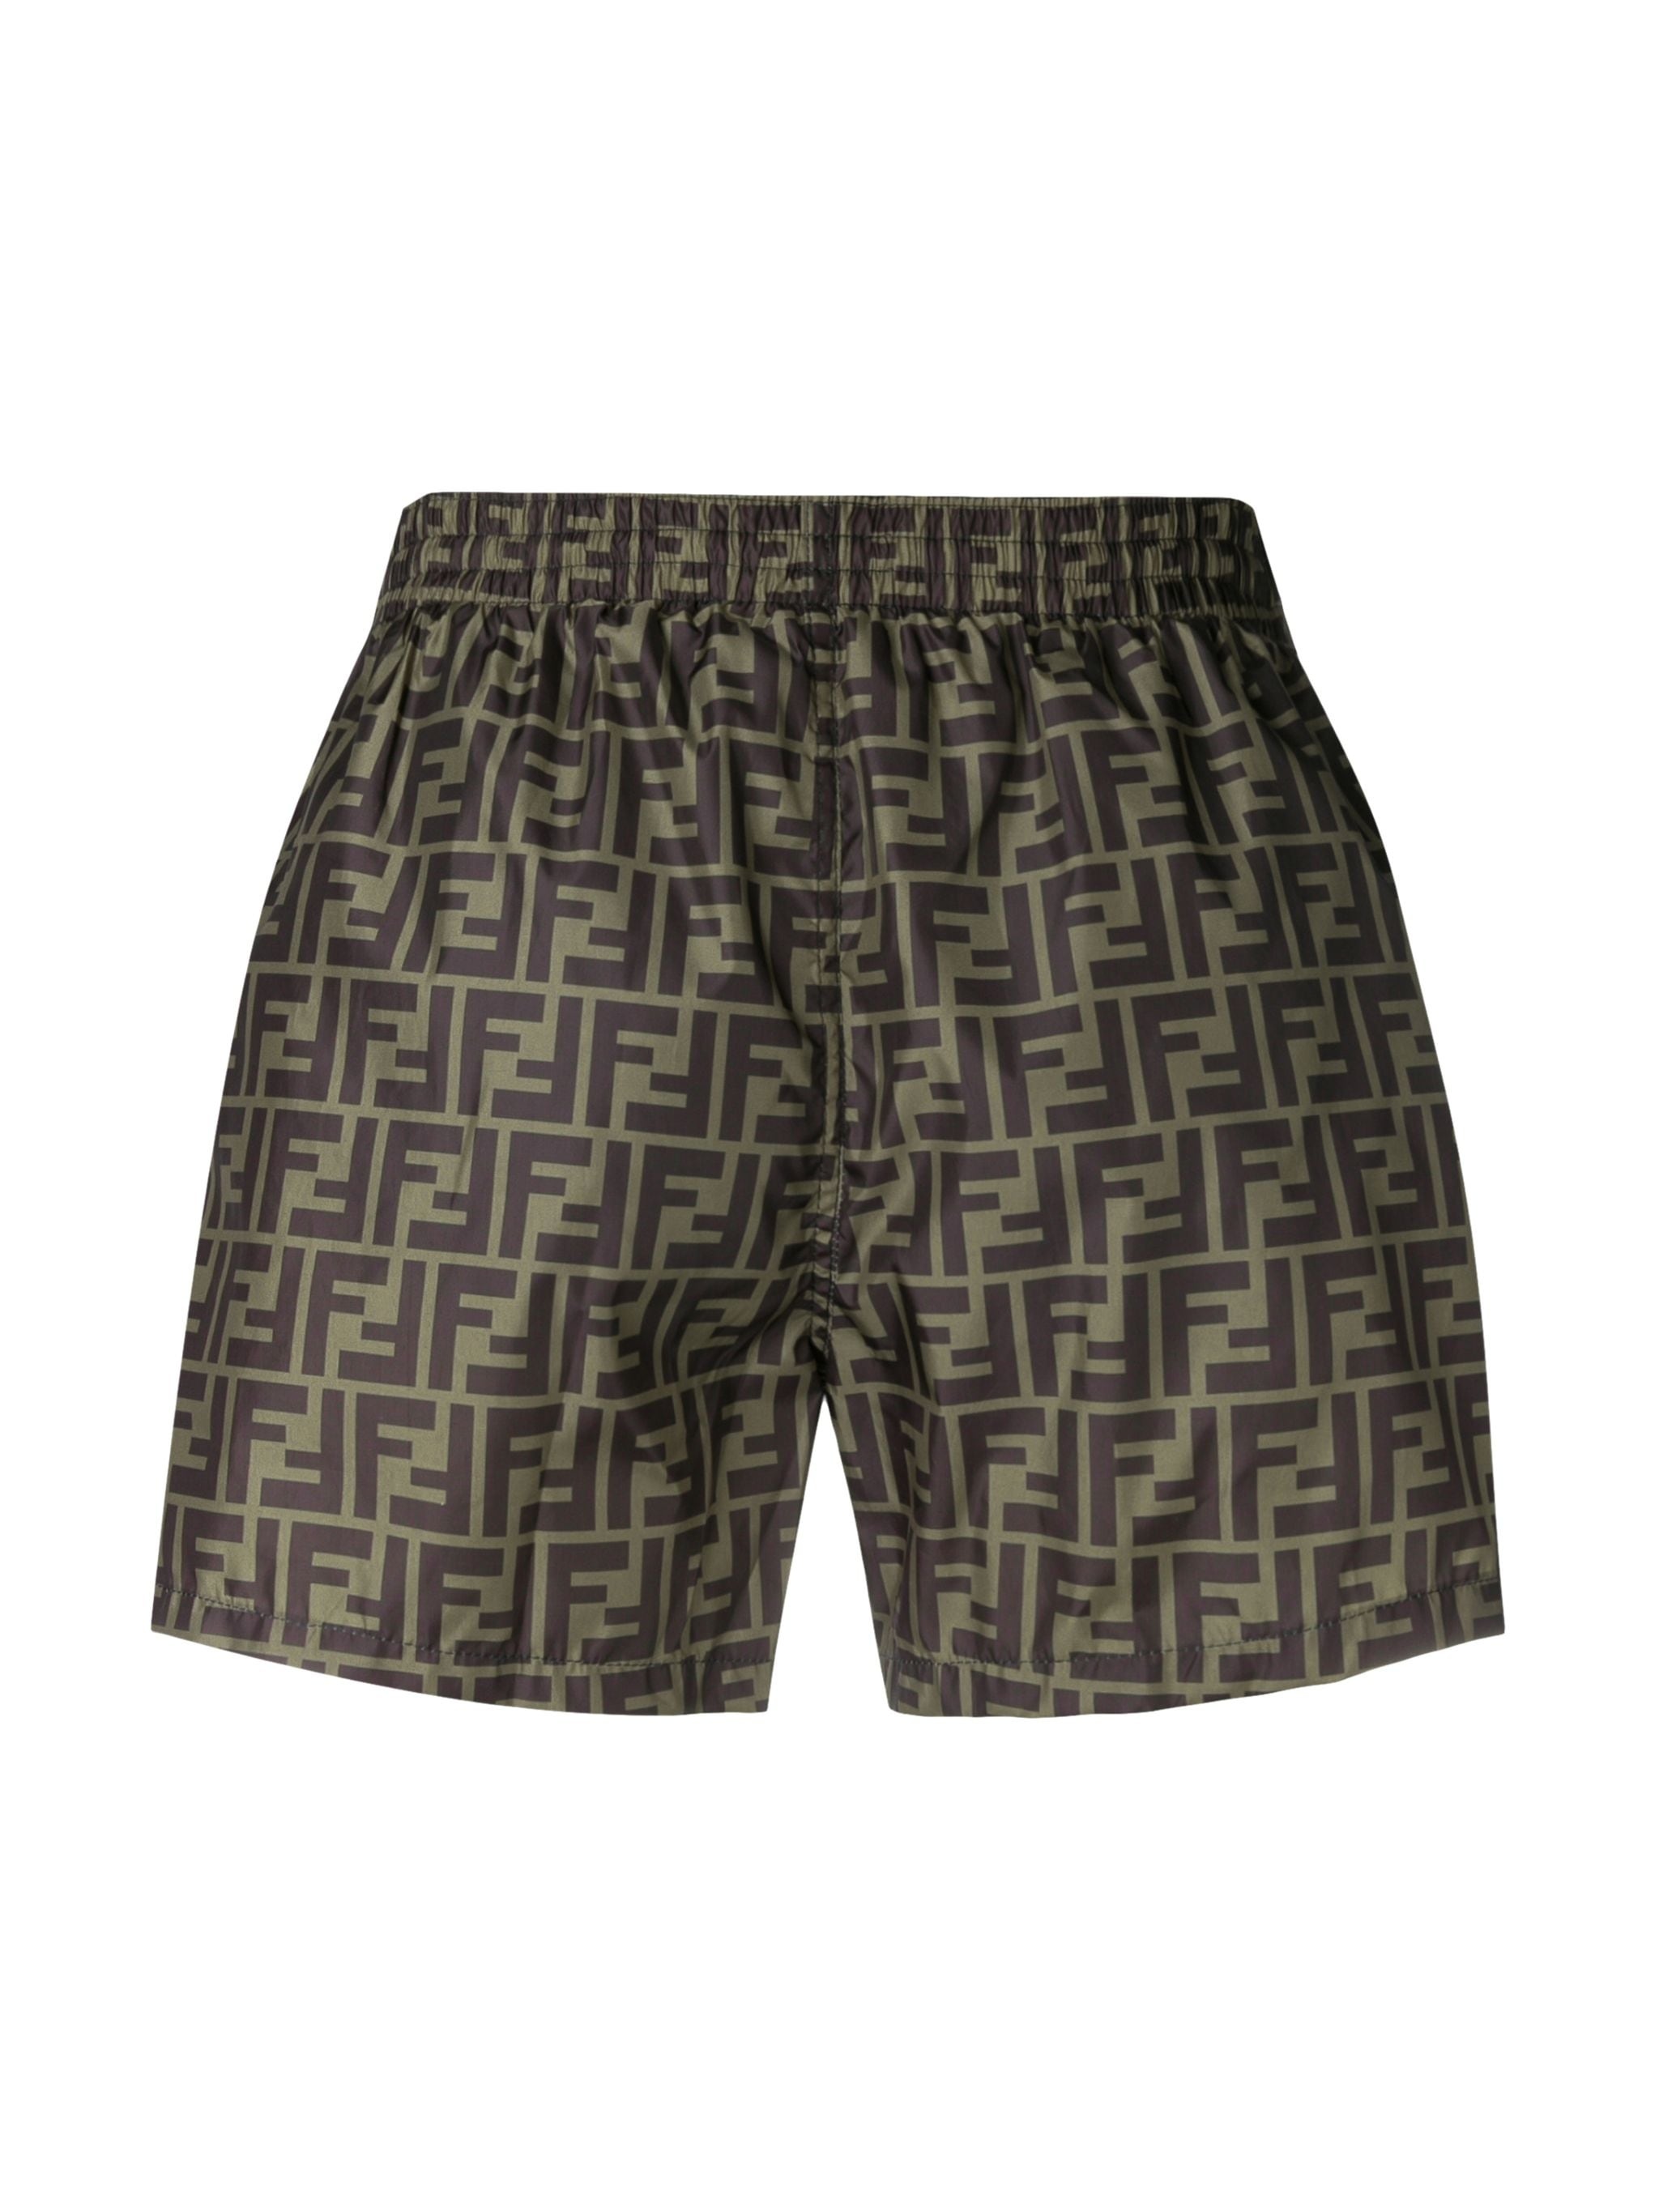 FF motif swim shorts - 2